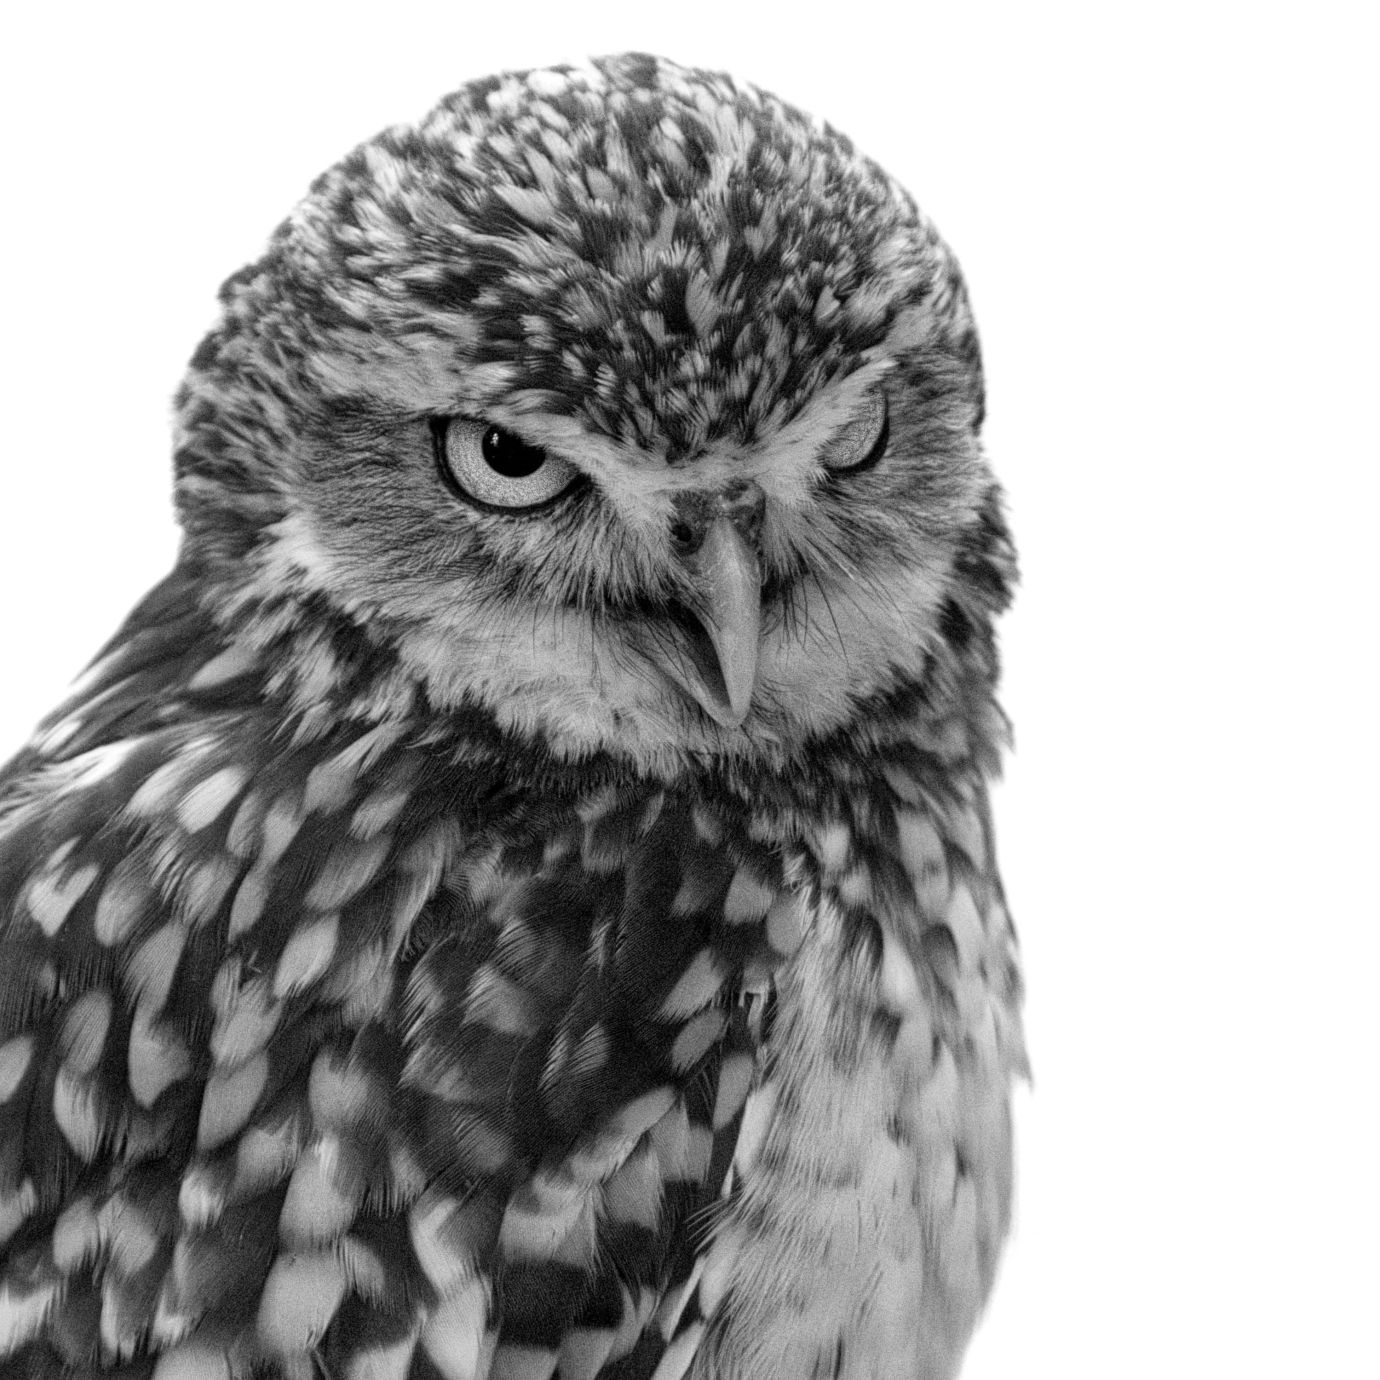 Burrowing-owl-monochrome-Hawk-Conservancy-Hampshire-9022-11102022